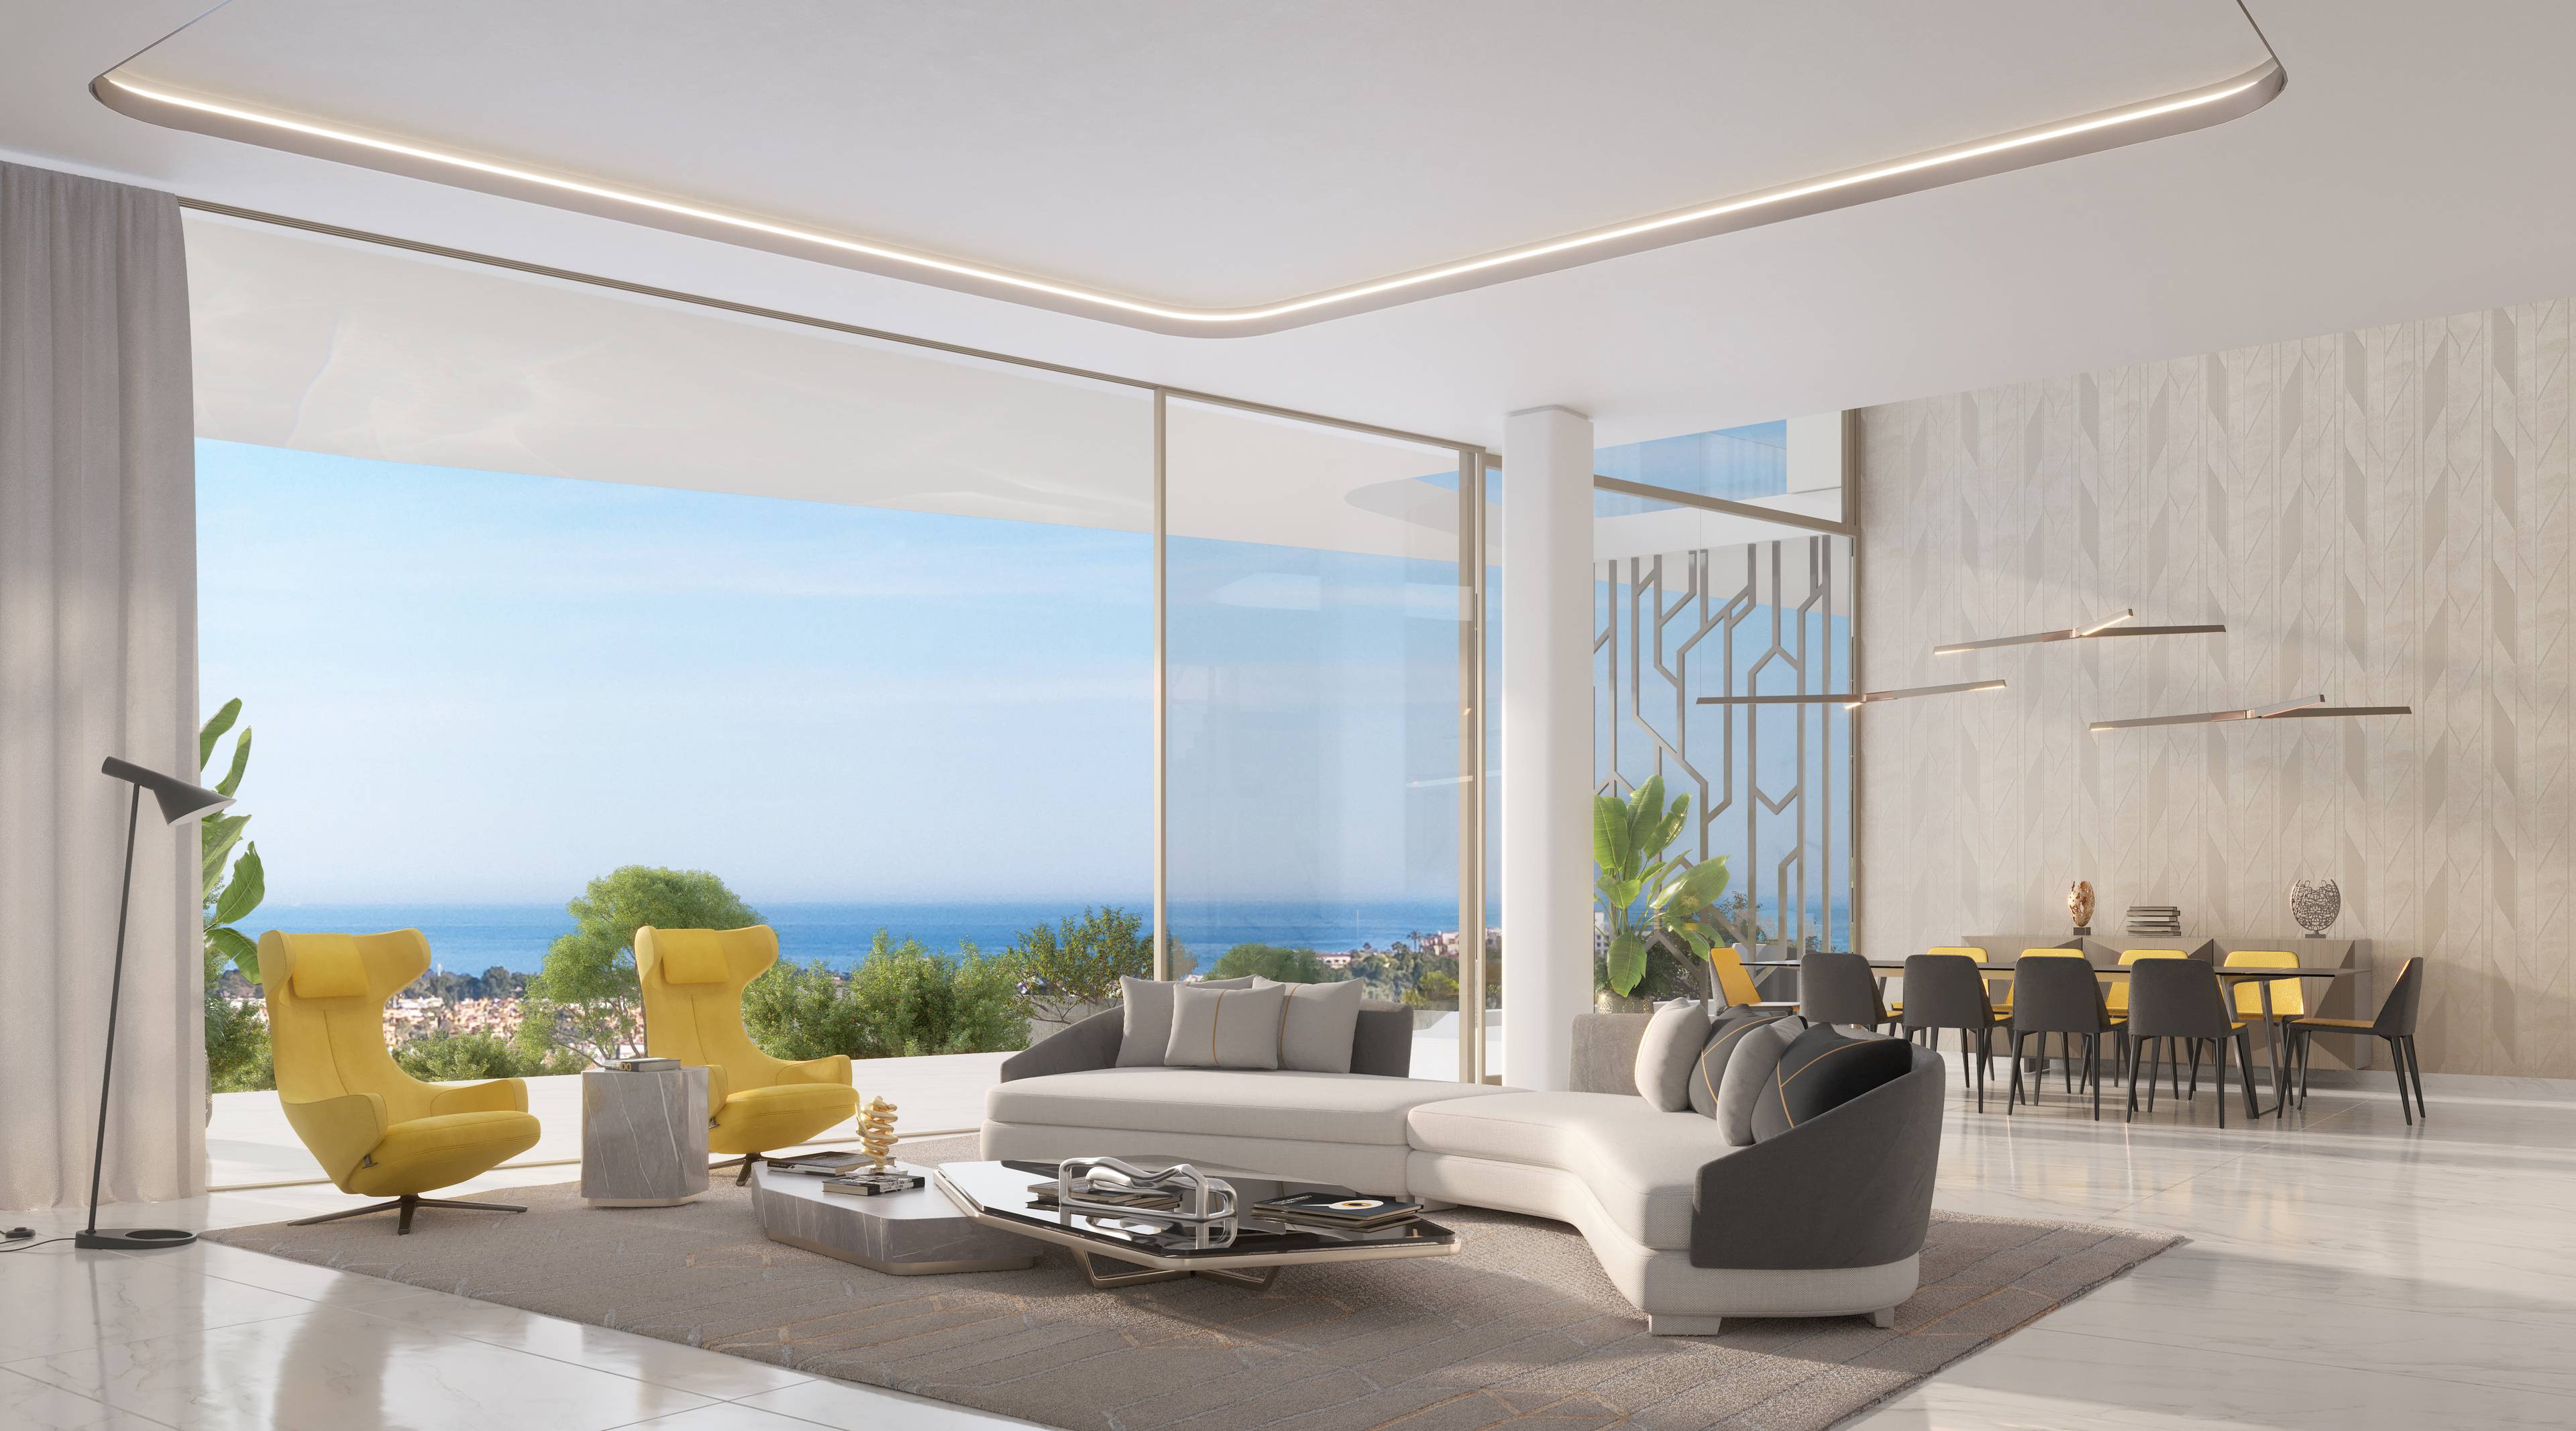 5 Bedroom Villa for Sale, Benahavís, Spain. Design Inspired by Lamborghini